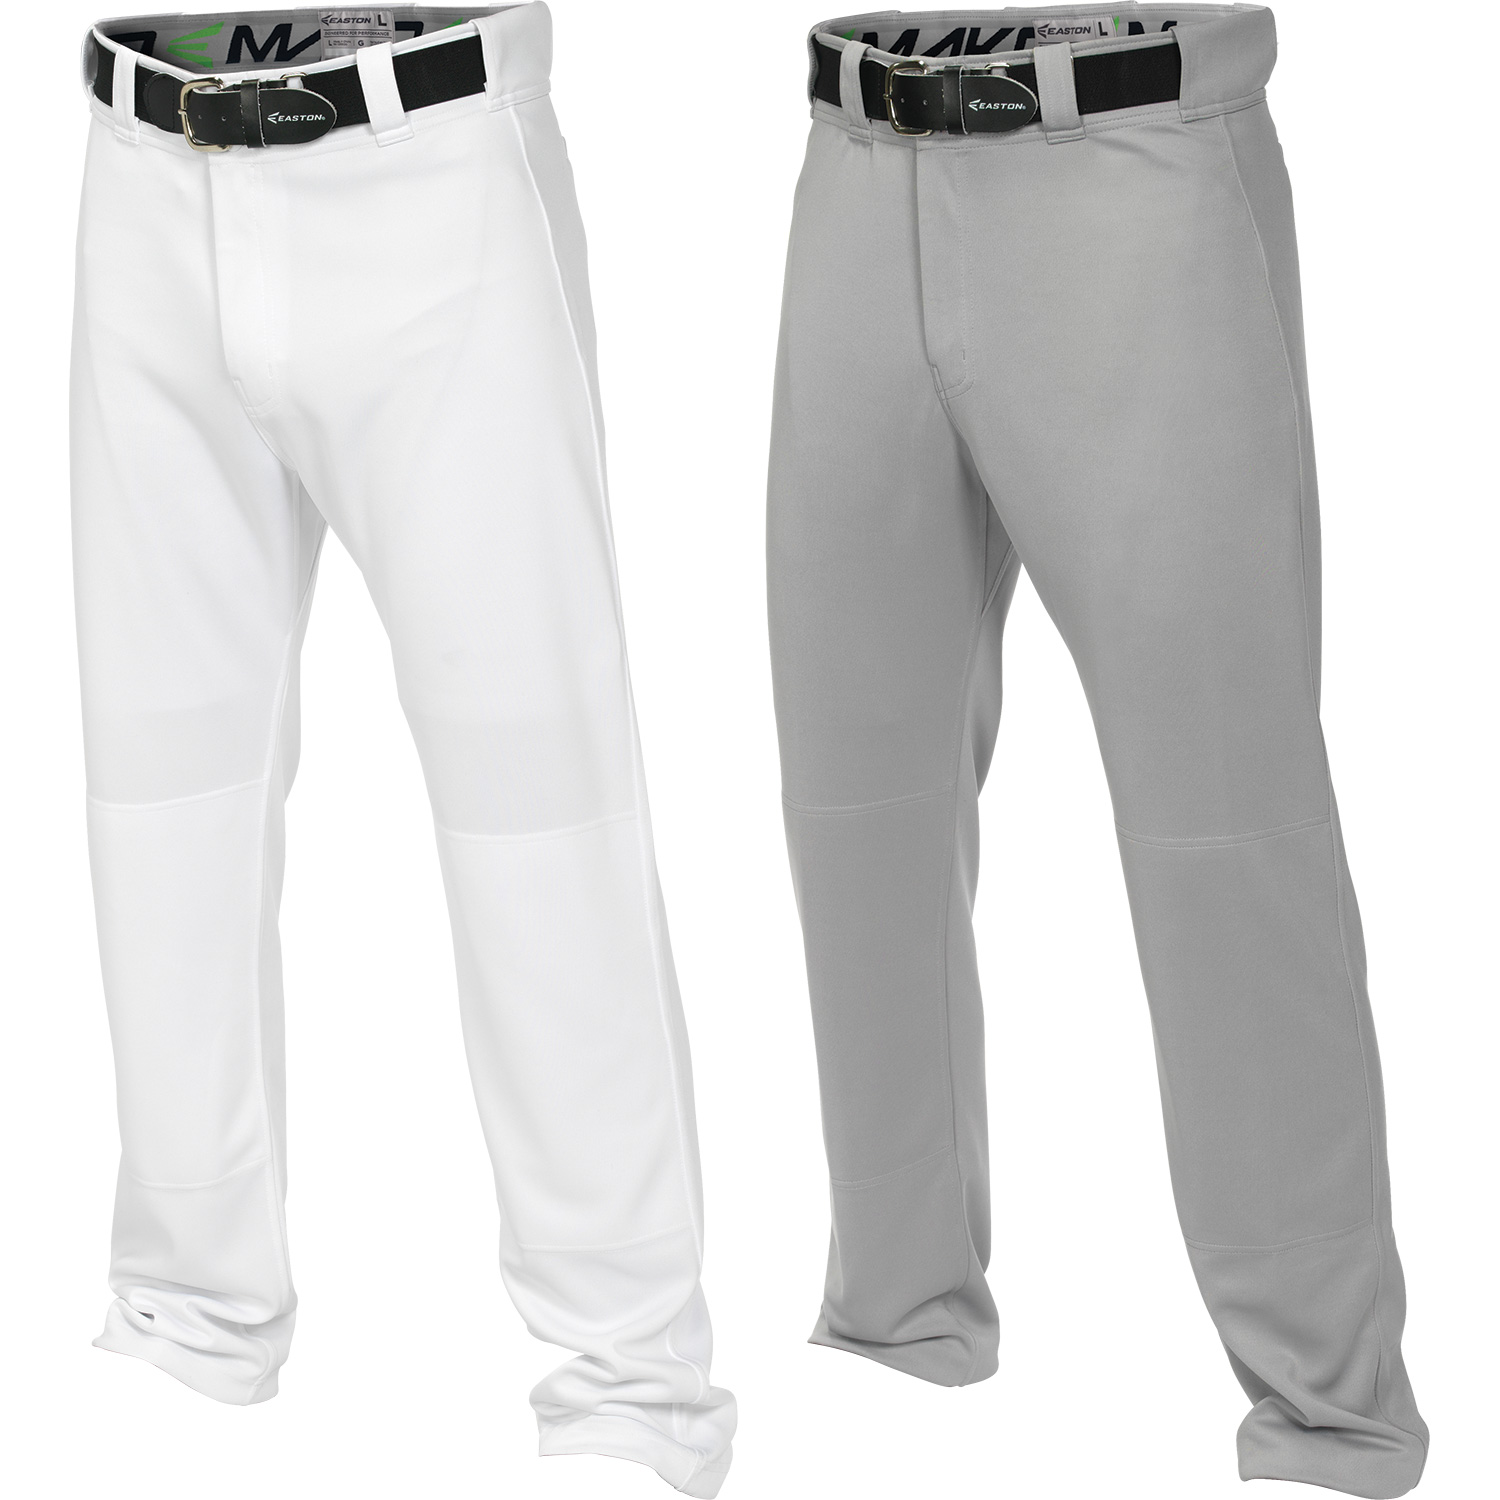 Easton Mako 2 Youth Baseball Pants Light Grey NWT 